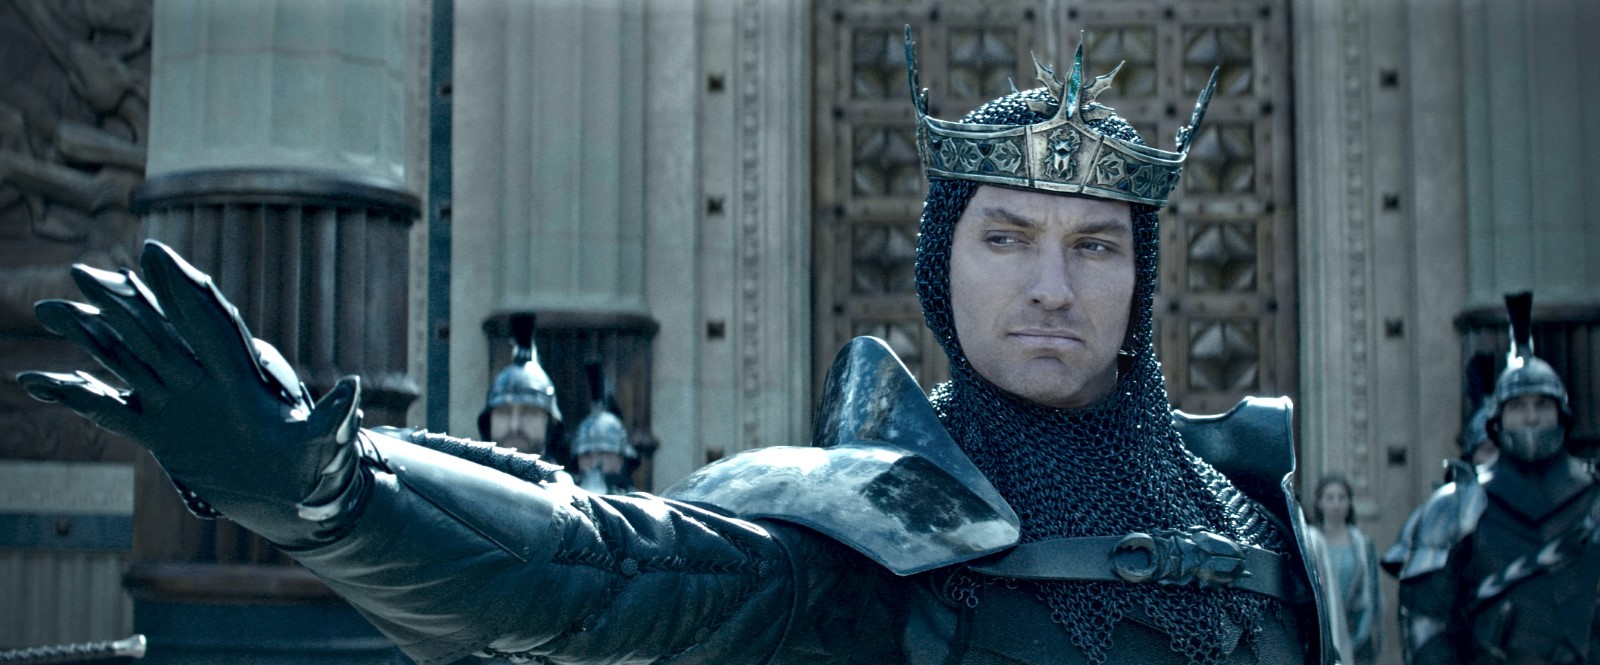 1080P King Arthur: Legend Of The Sword 2017 Movie Online